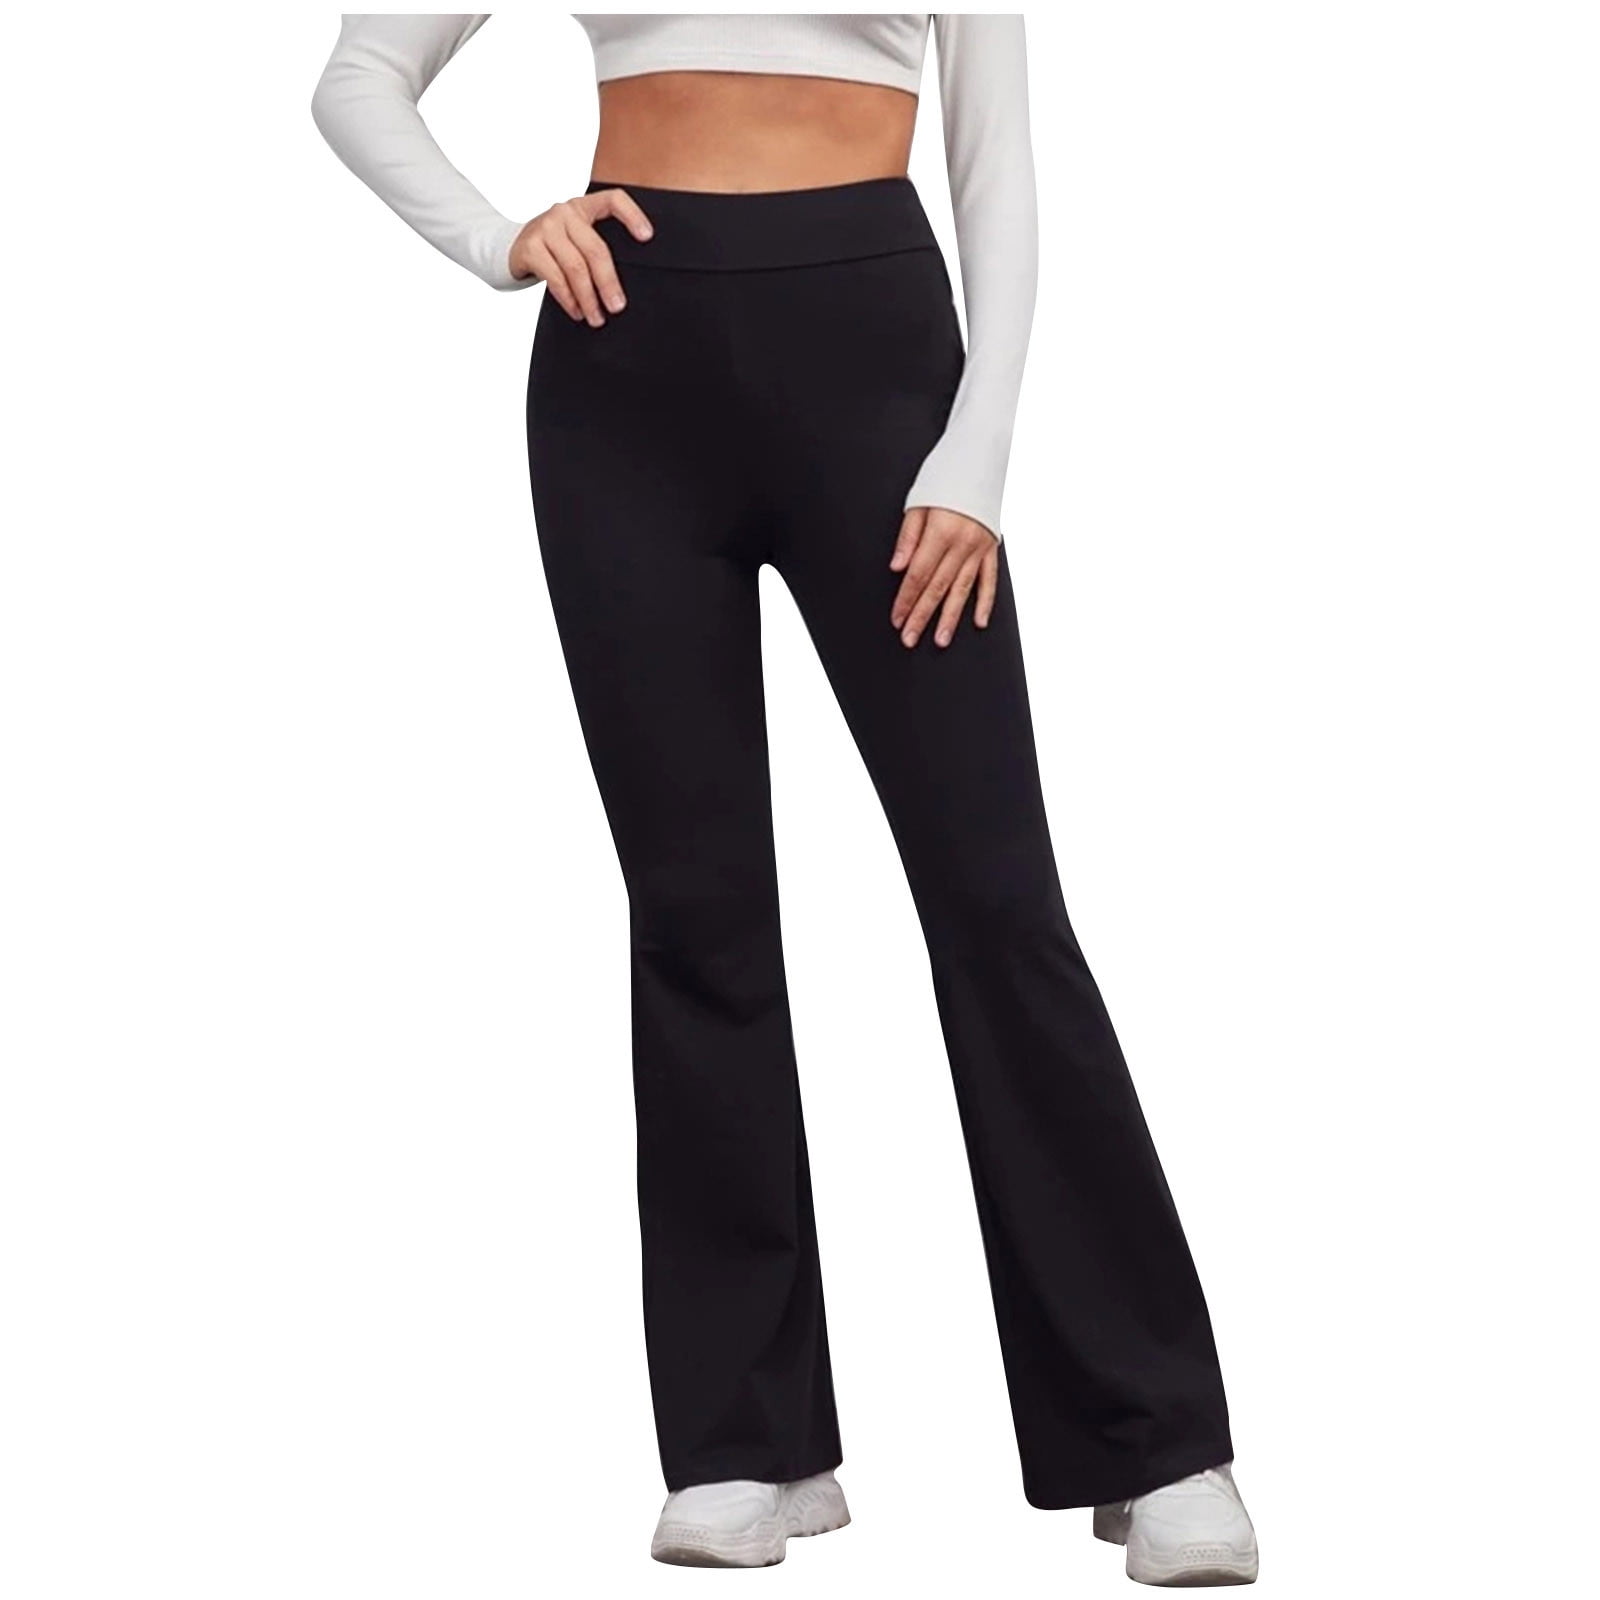 RYRJJ Womens Flare Yoga Dress Pants High Waist Stretch Business Work Pants  Bootcut Leg Slacks Pull on Casual Bell Bottom Trousers(Black,XL) 